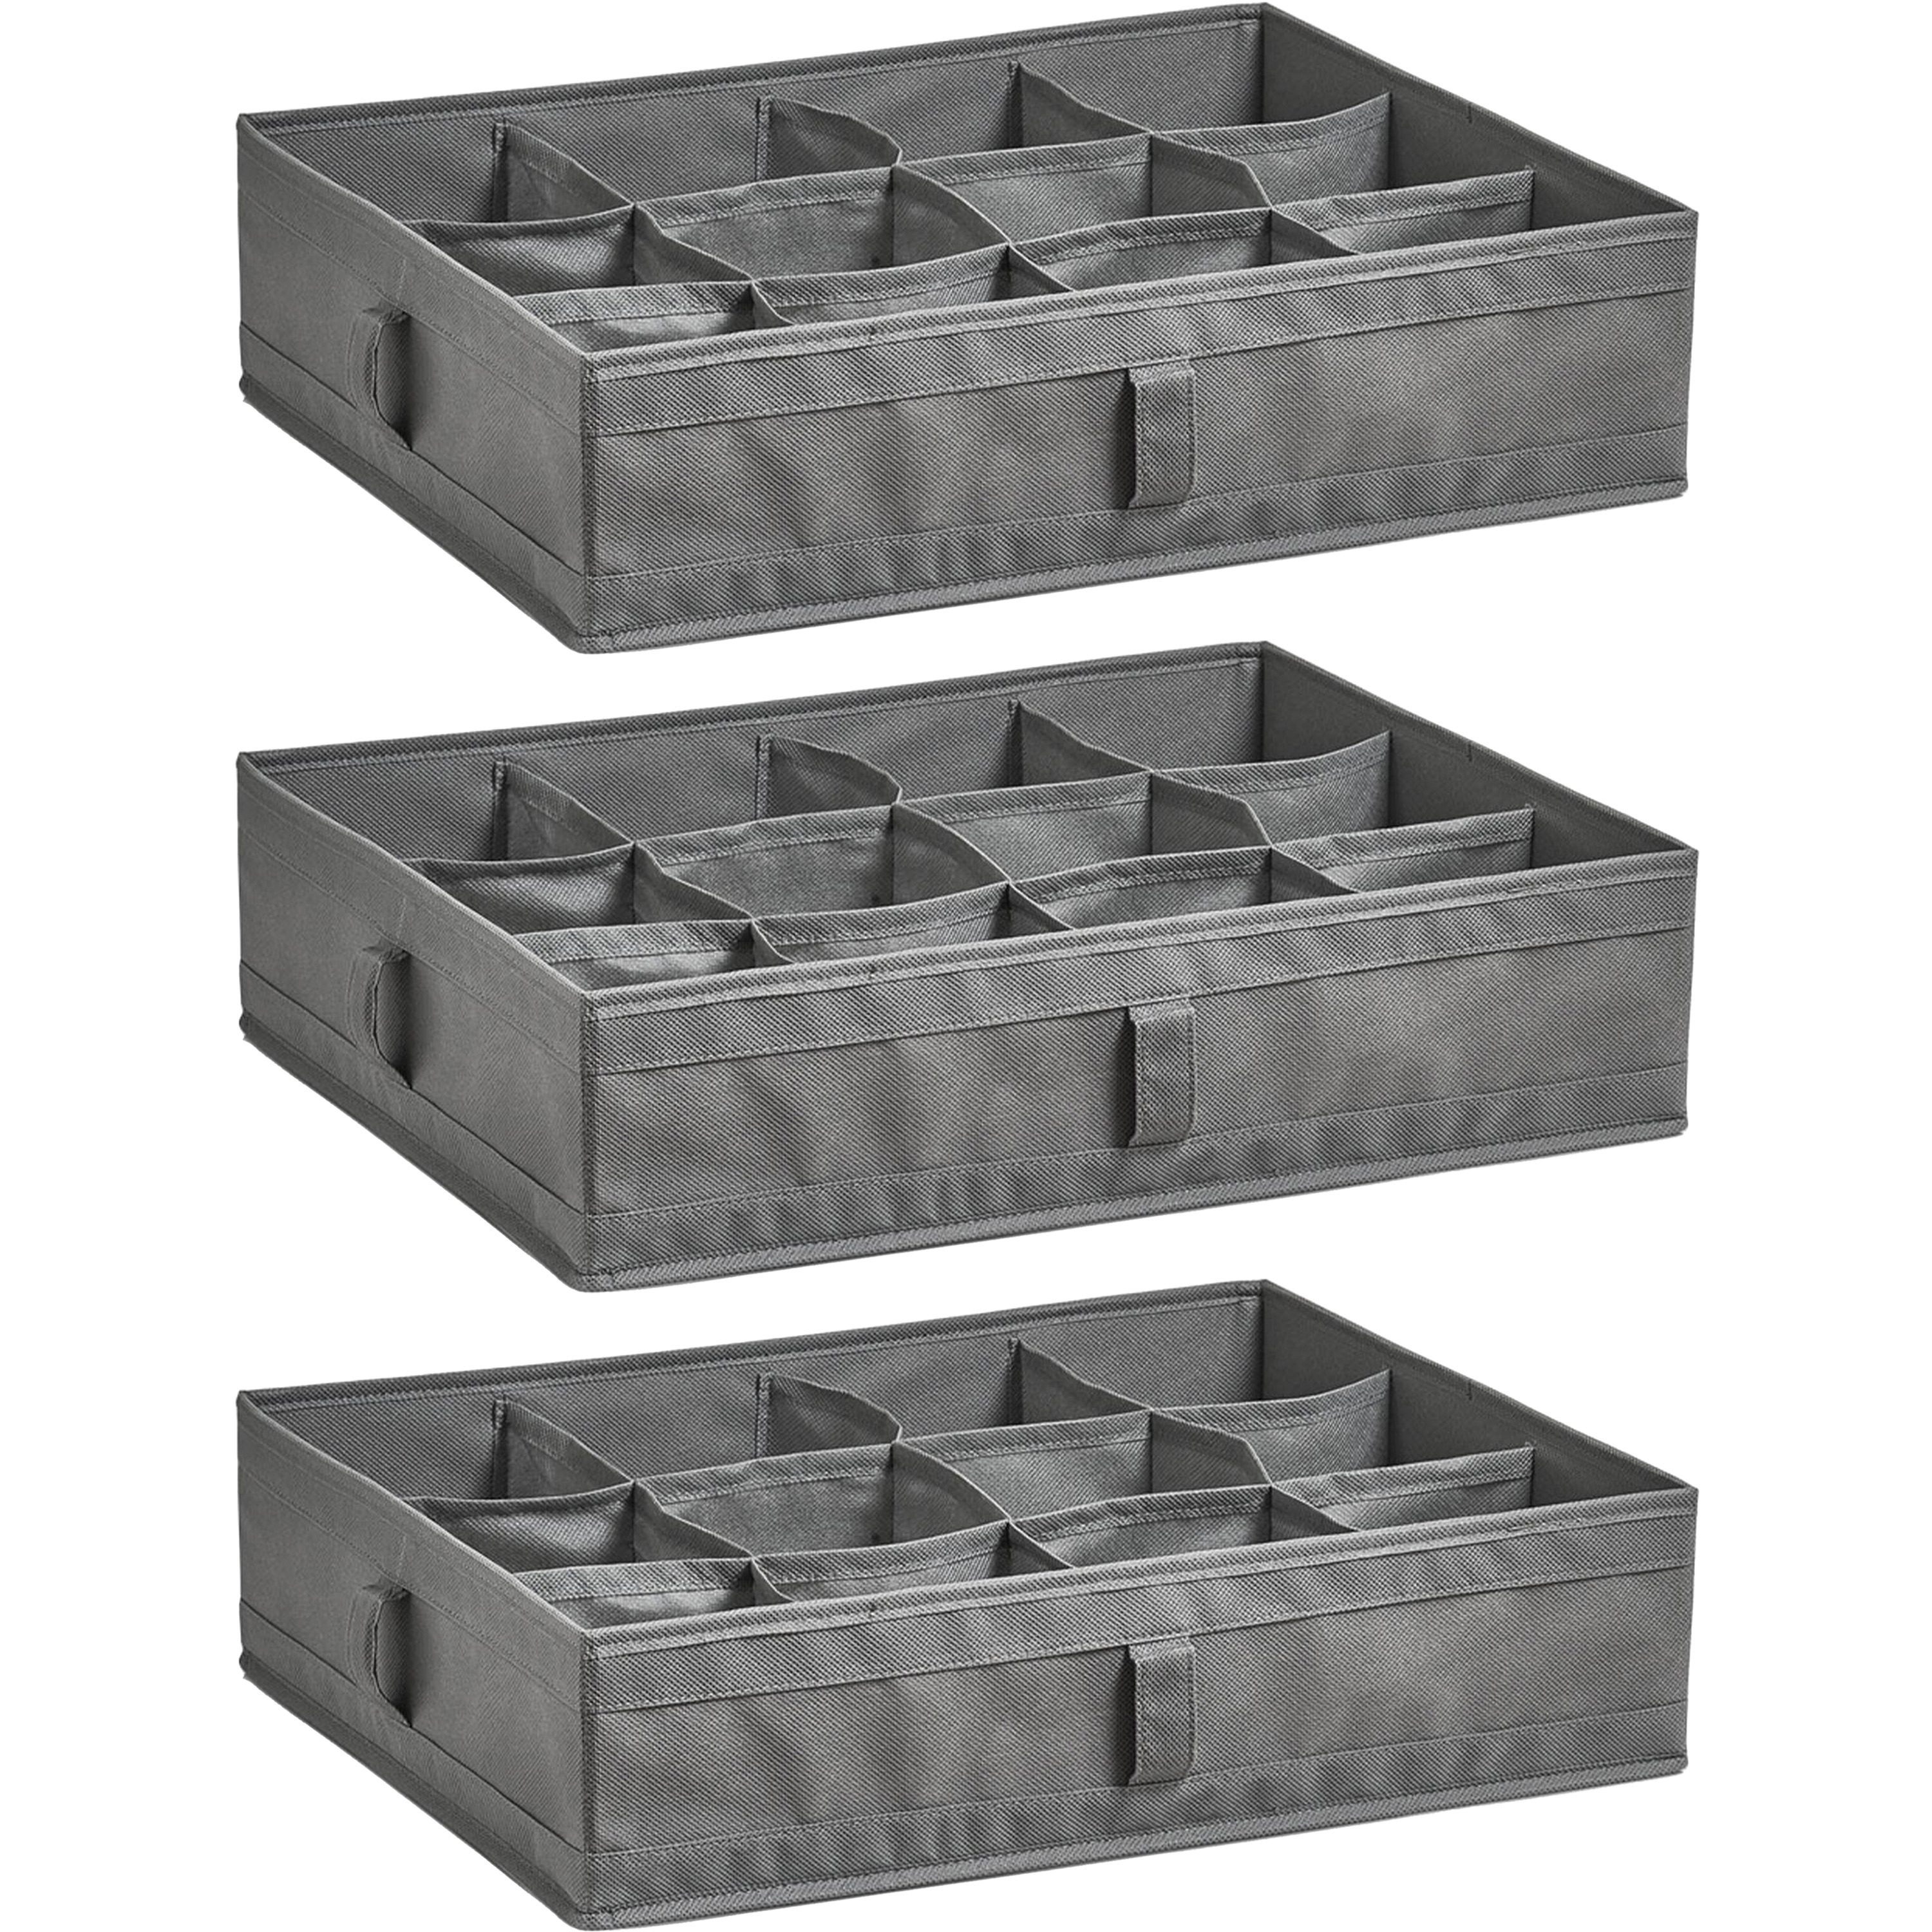 Kleding-kast organizer 3x 12 vakken grijs 44 x 34 x 11 cm polyester